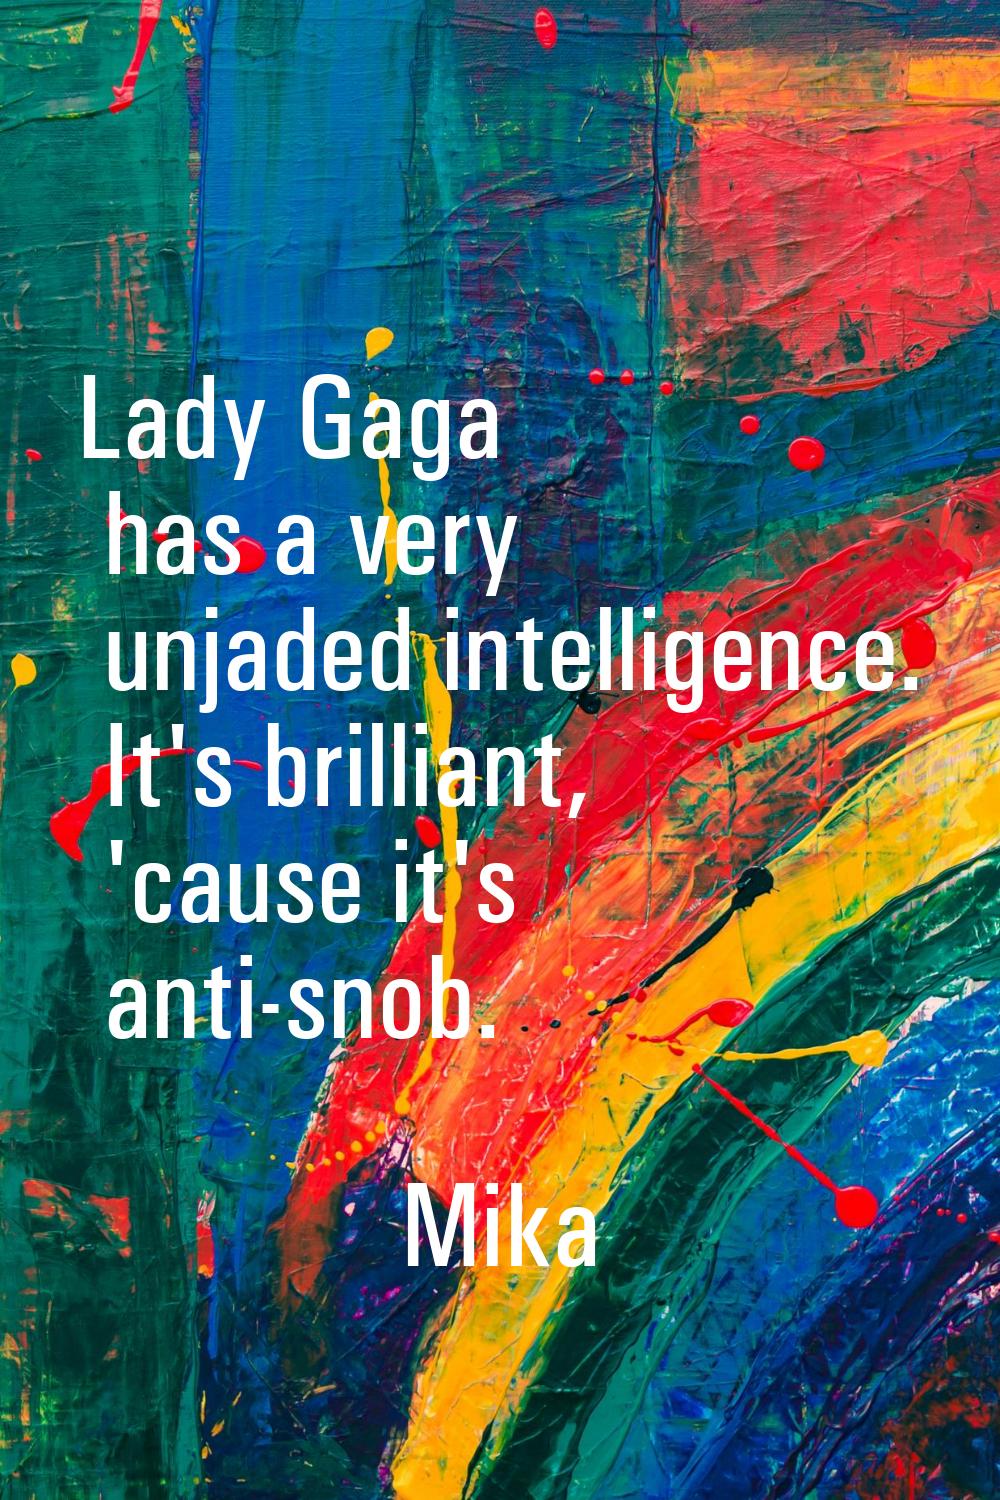 Lady Gaga has a very unjaded intelligence. It's brilliant, 'cause it's anti-snob.